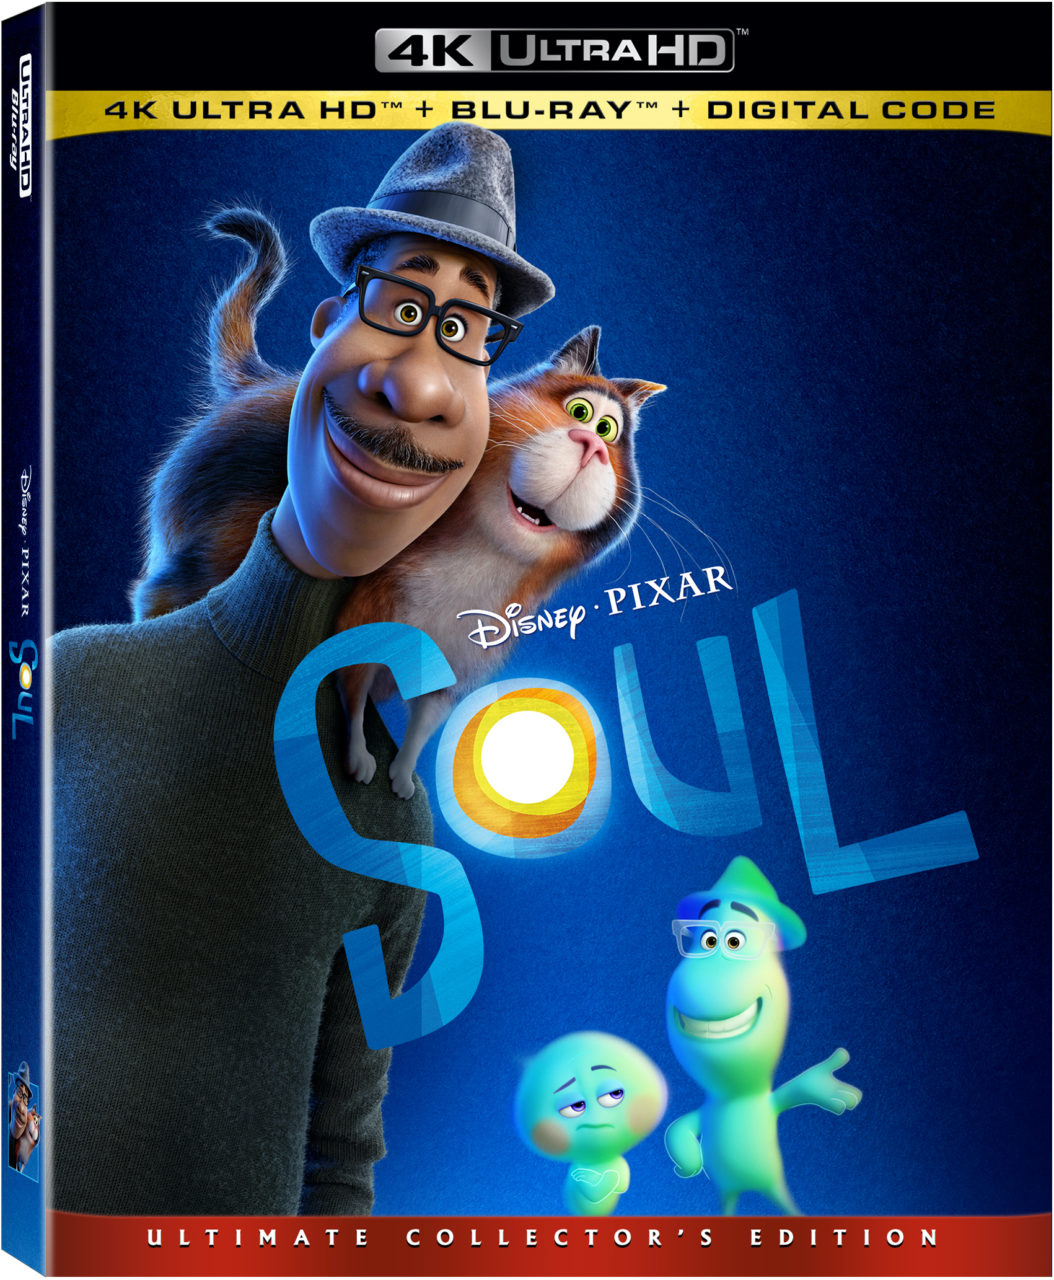 Disney and Pixar's SOUL 4K Ultra HD Combo Pack cover (Walt Disney Studios Home Entertainment)